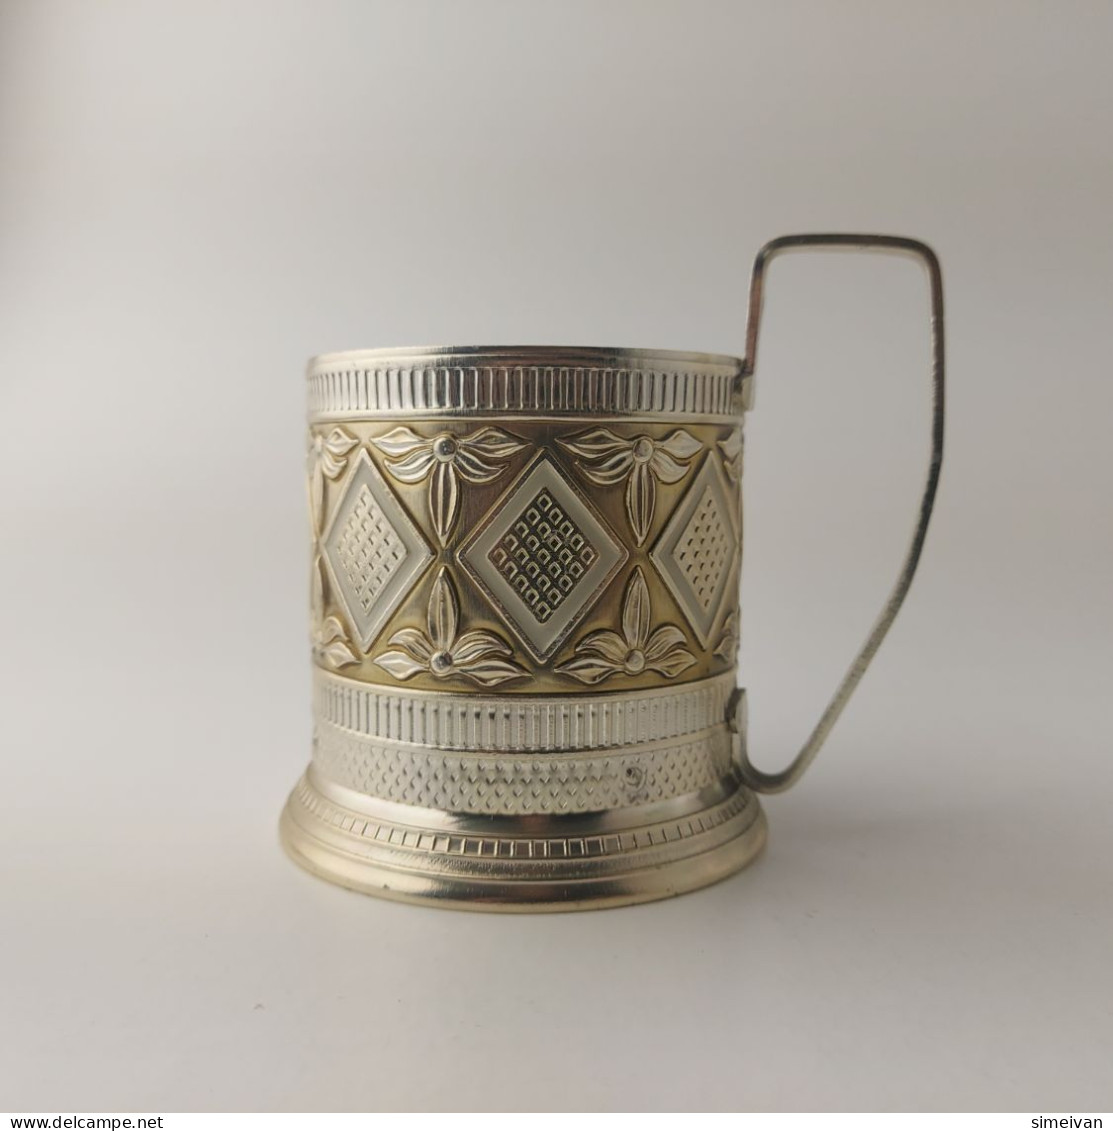 Vintage Soviet Russian Podstakannik Tea Cup Holder with Glass USSR #5536